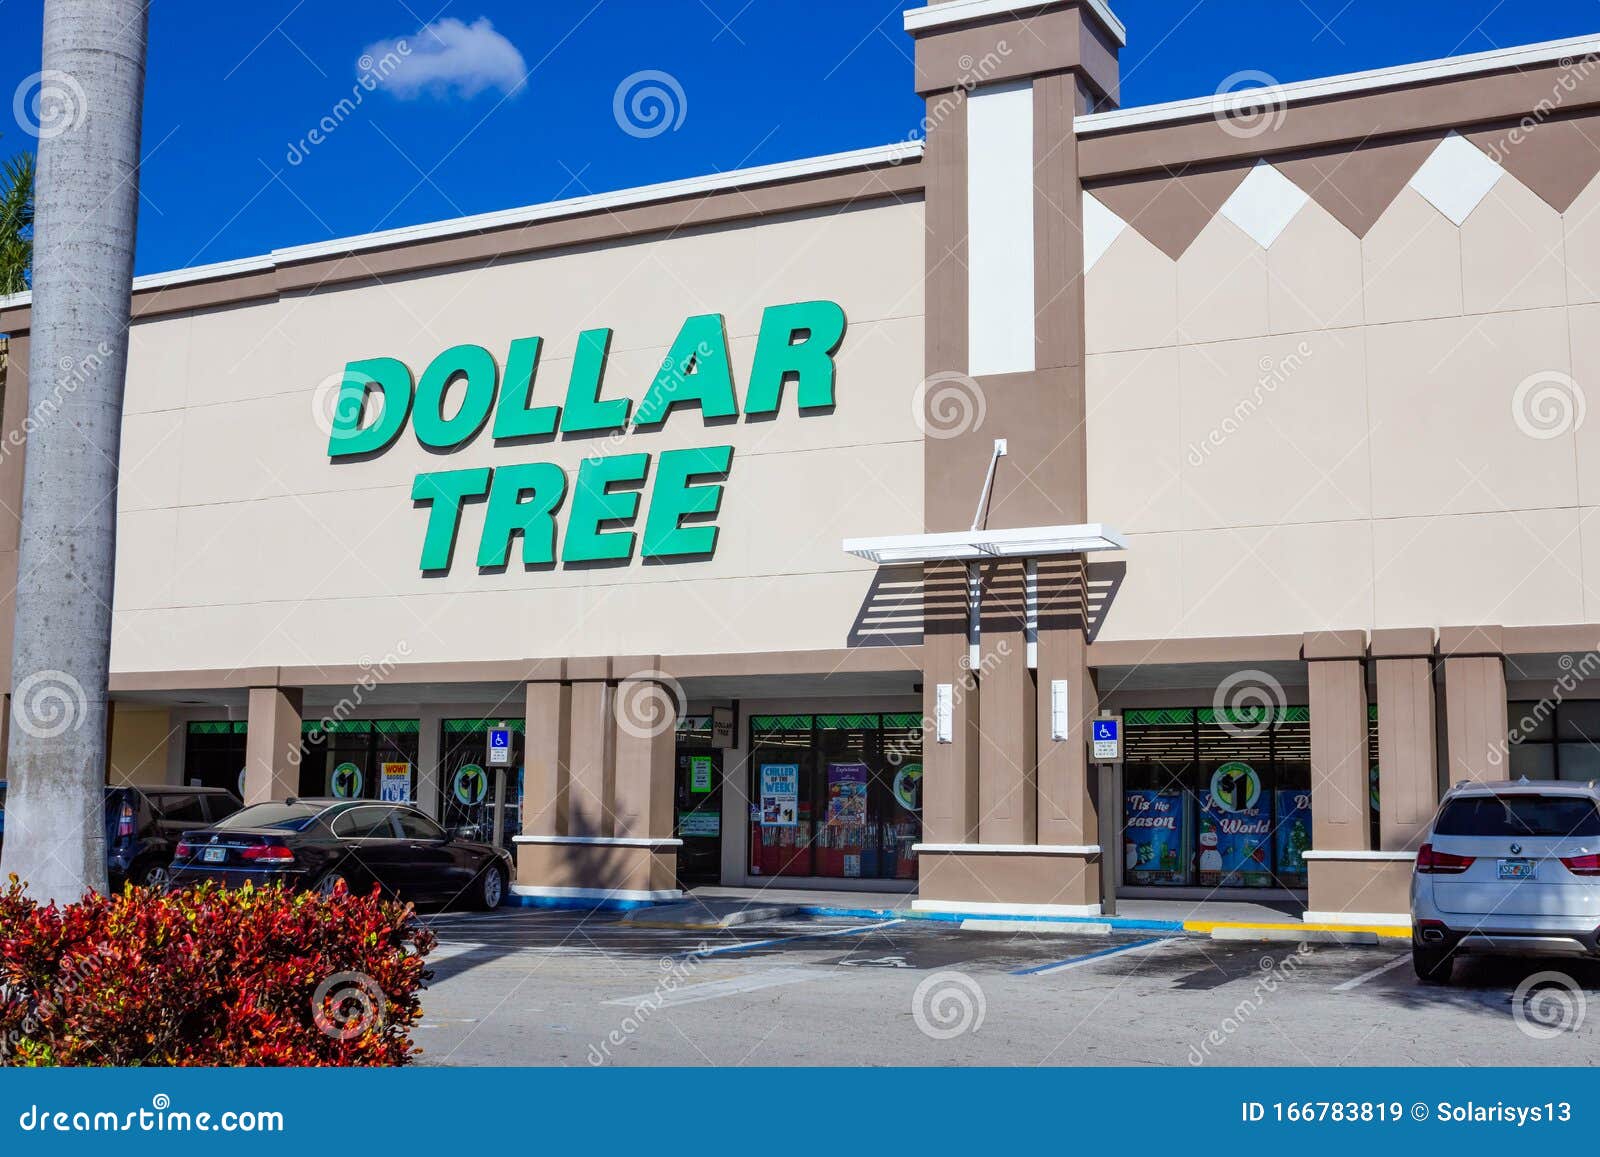 Miami, USA - November 30, 2019: Dollar Tree Shop at Sunny Day Editorial